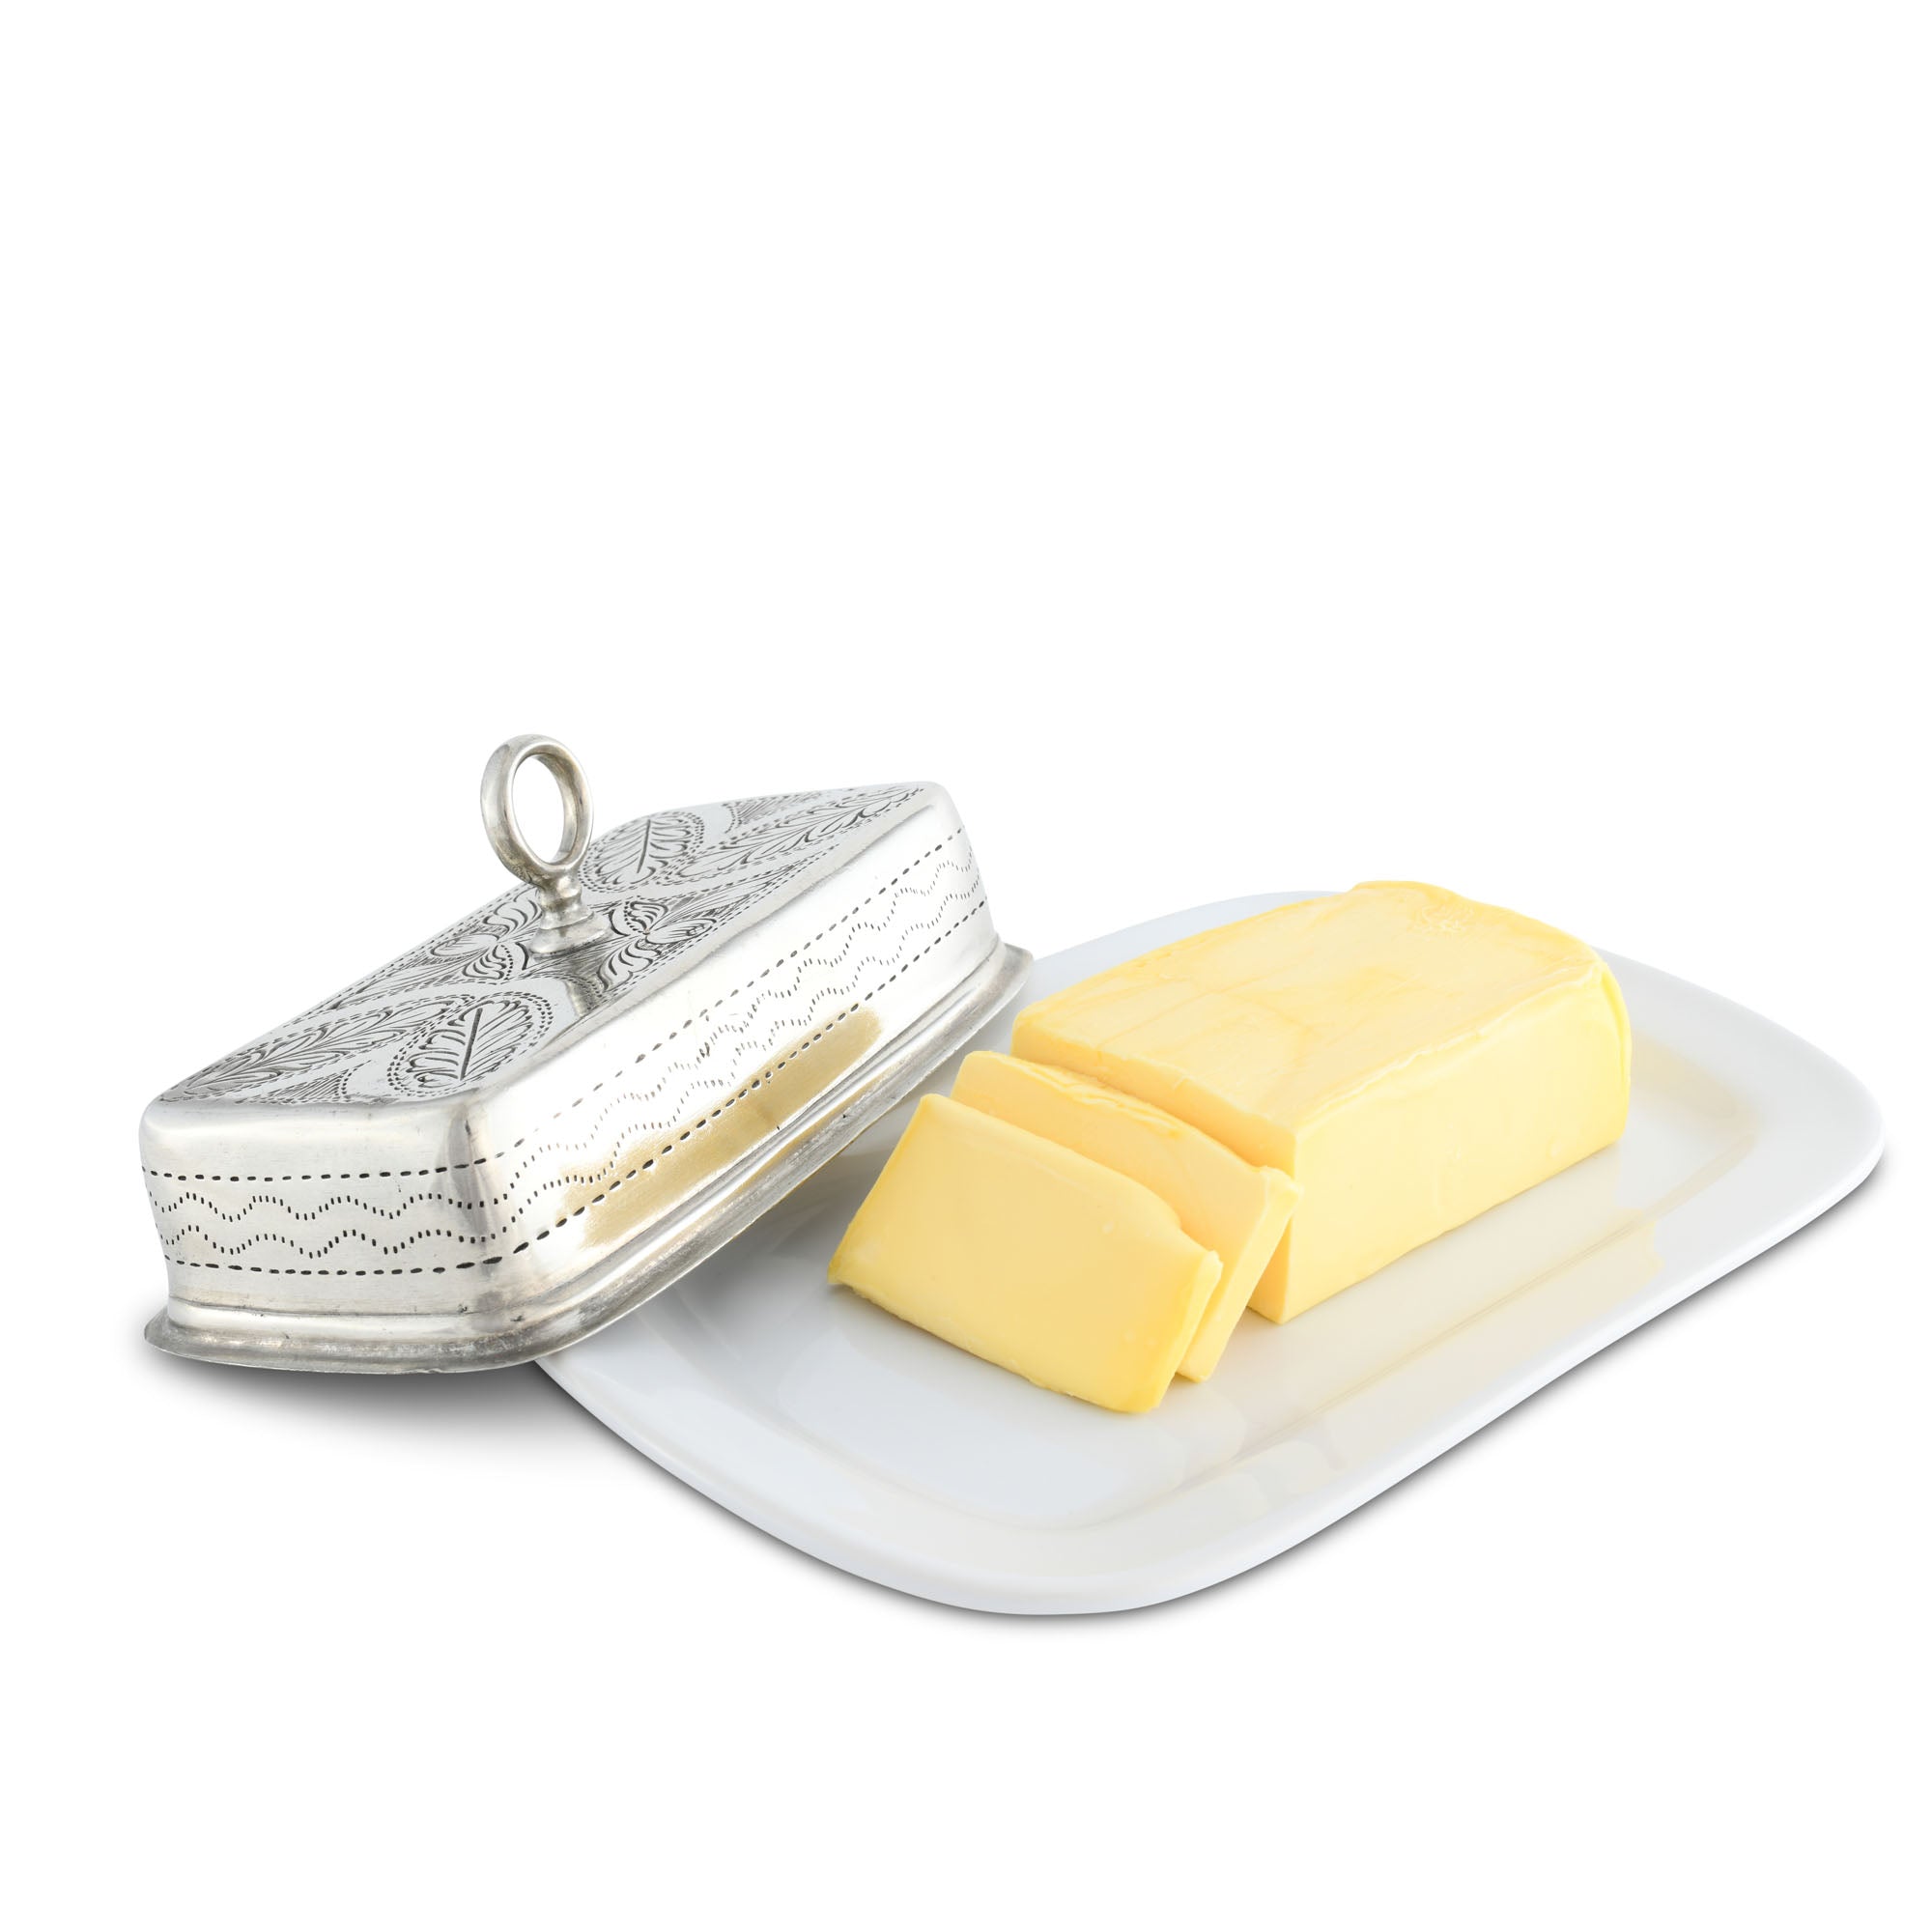 Vagabond House Provencal Butter Dish Product Image